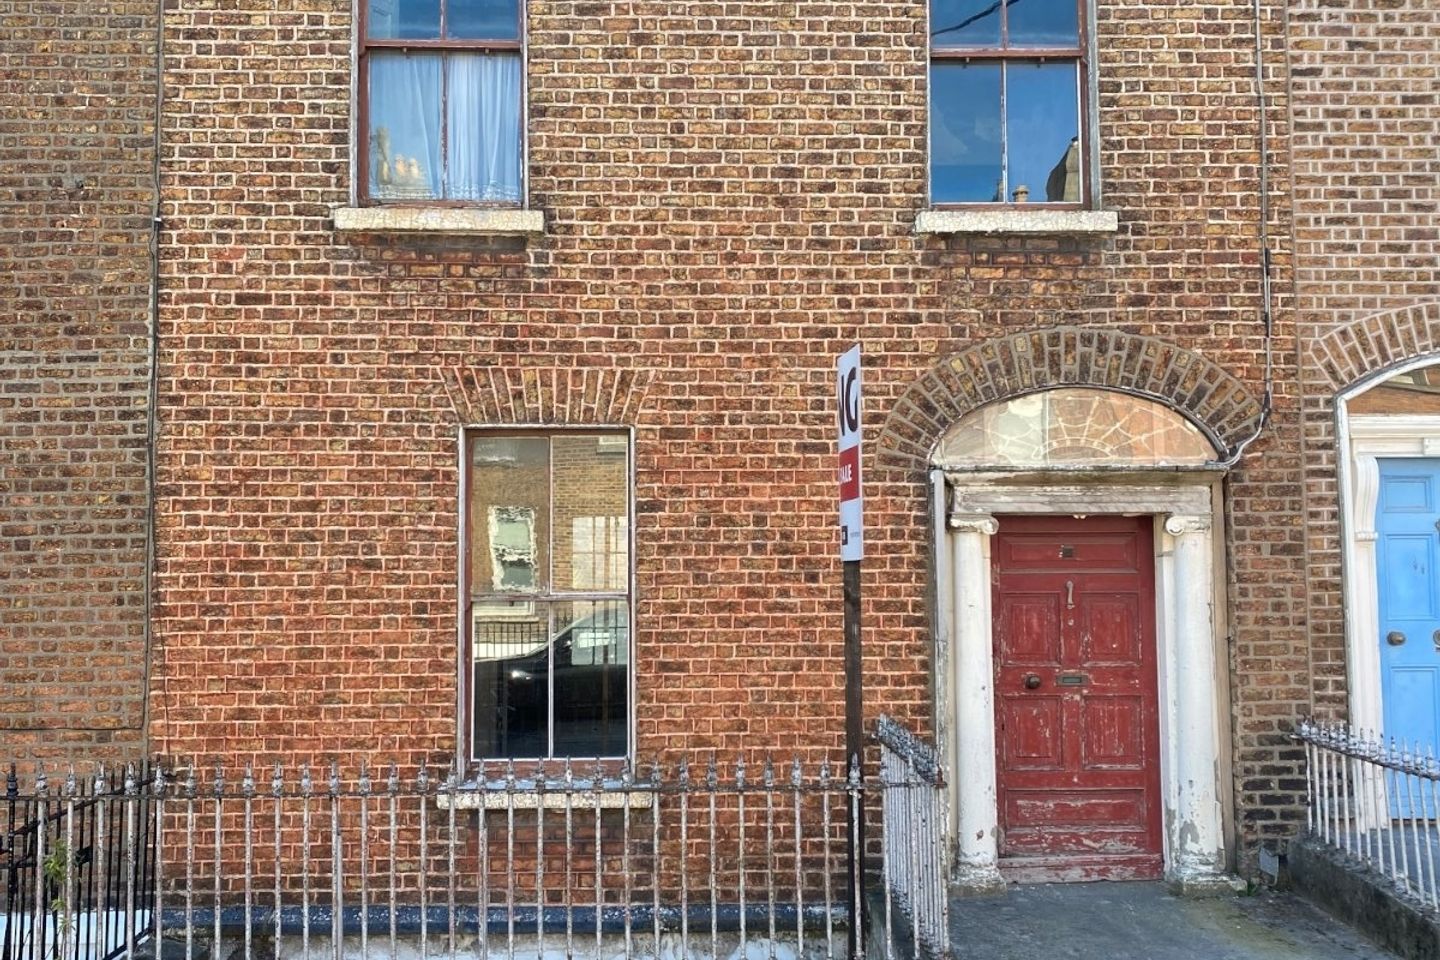 34 Synge Street, Portobello, Dublin 8